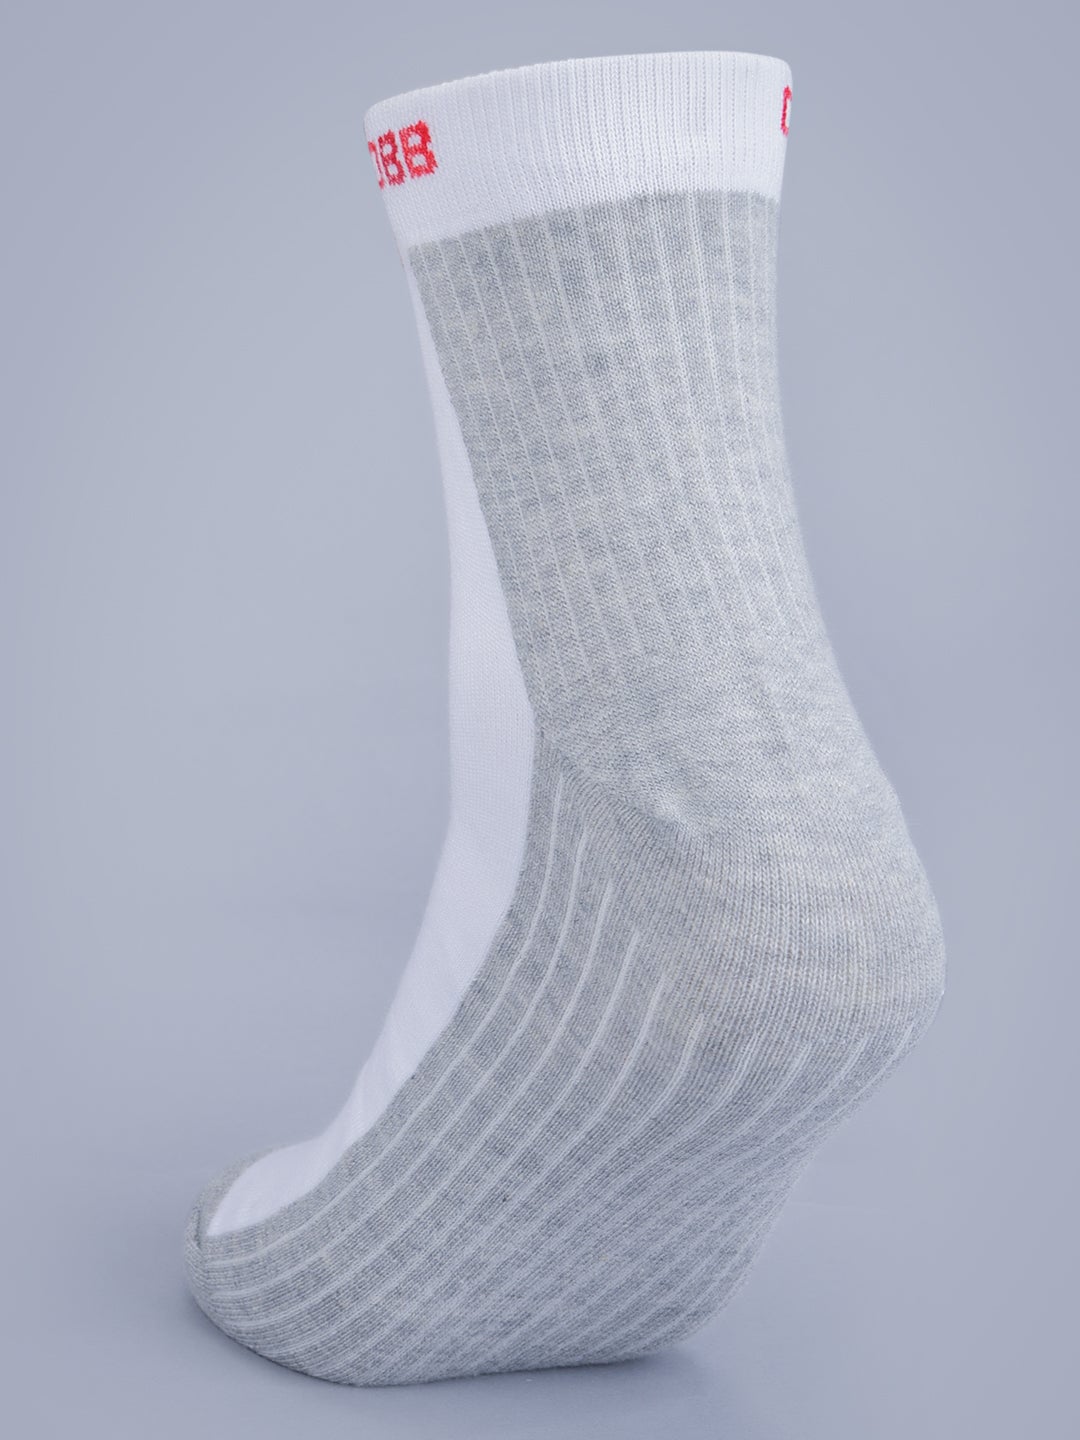 Cobb White Half Ankle Socks Grey